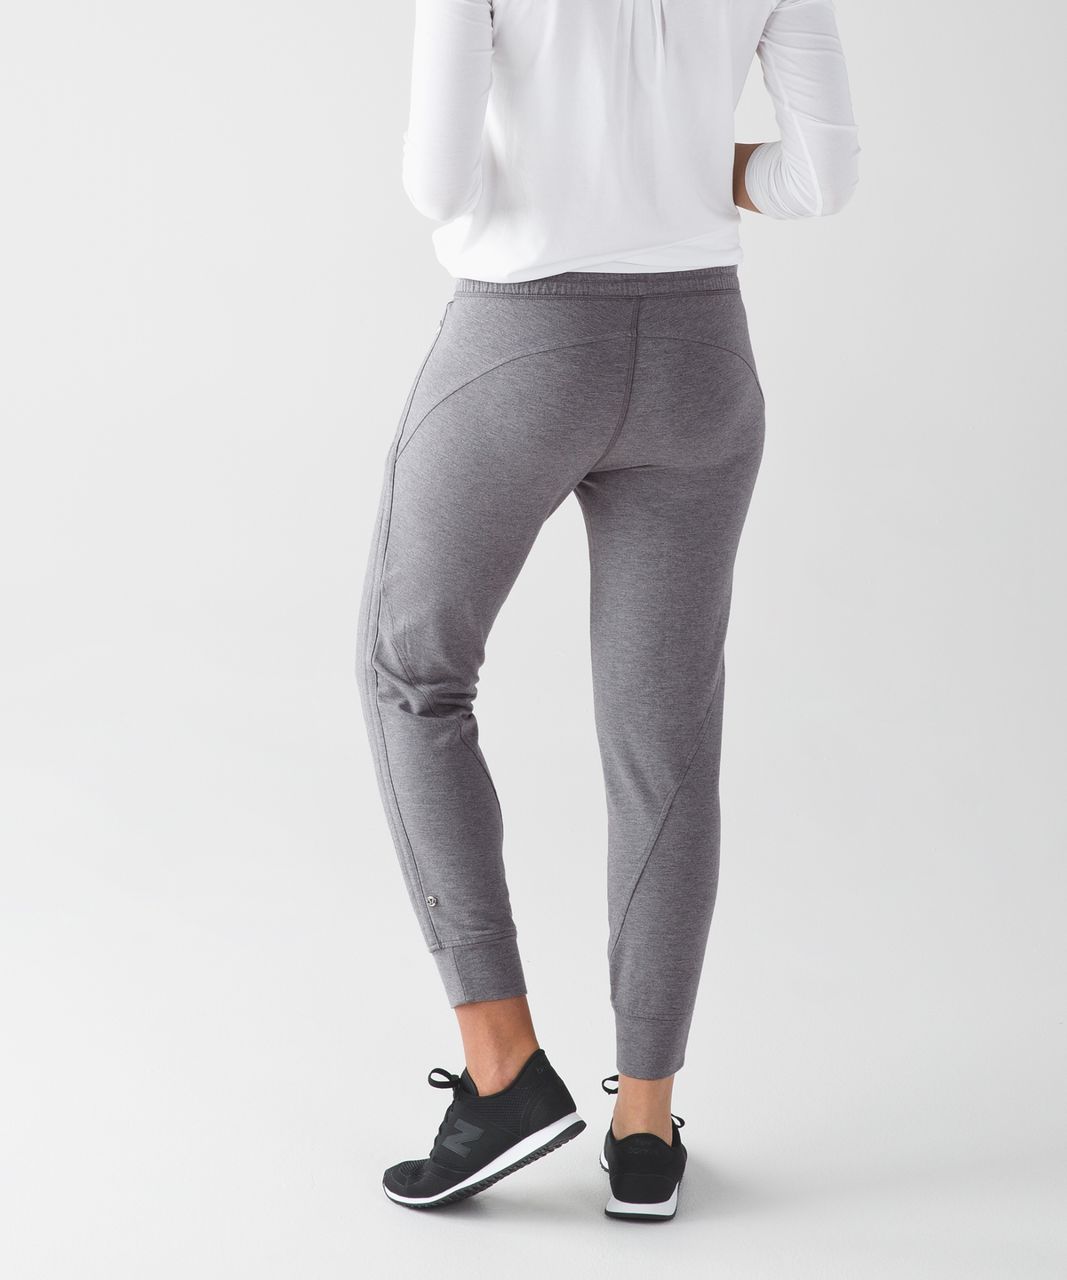 lululemon grey pants